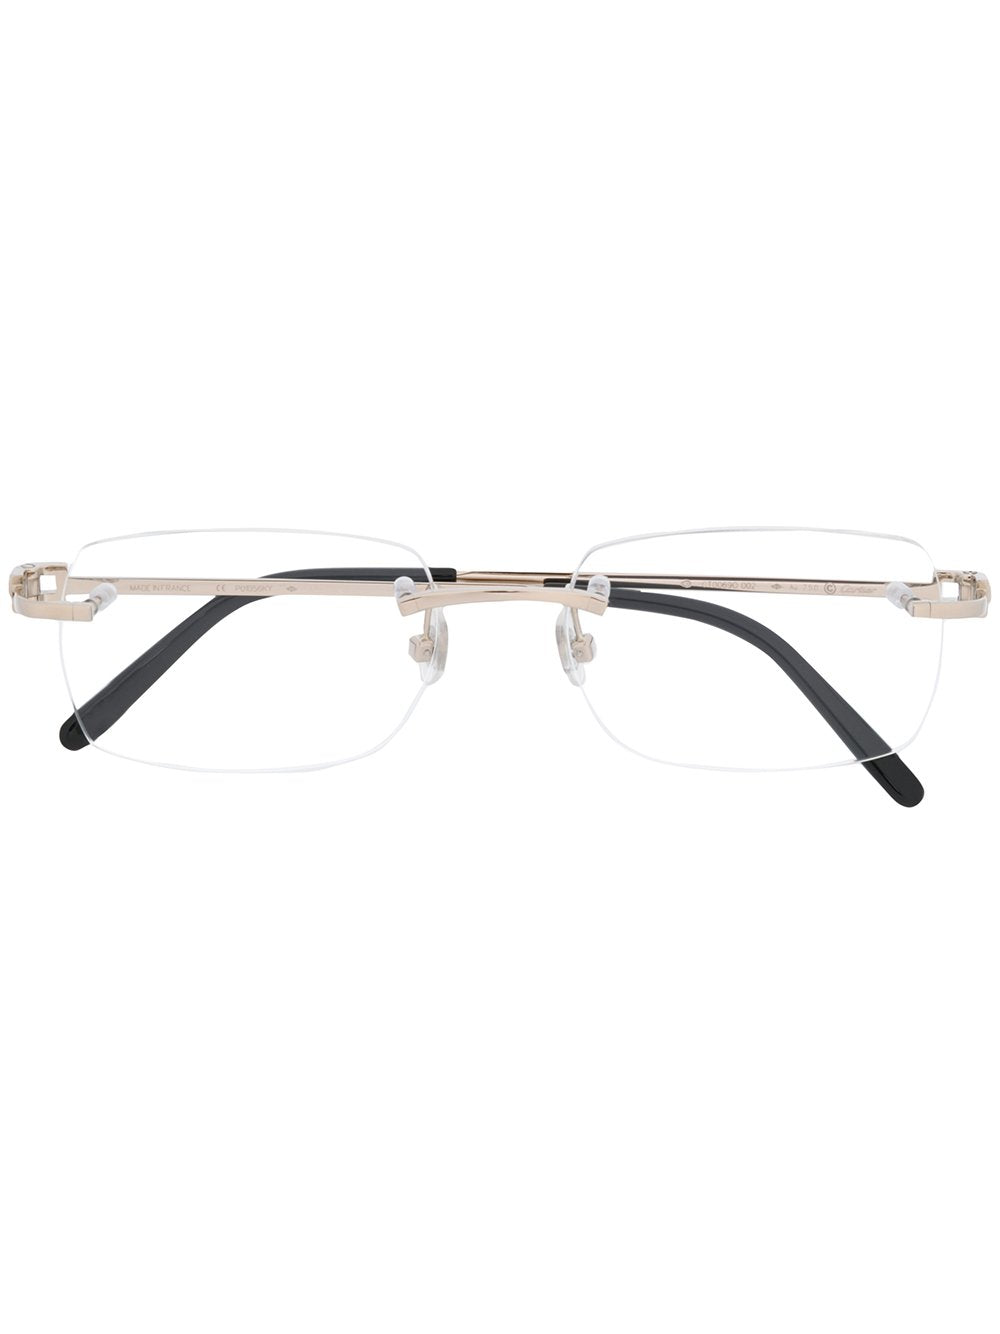 Cartier UNISEX Metal / 18kt white gold Glasses & Frames 